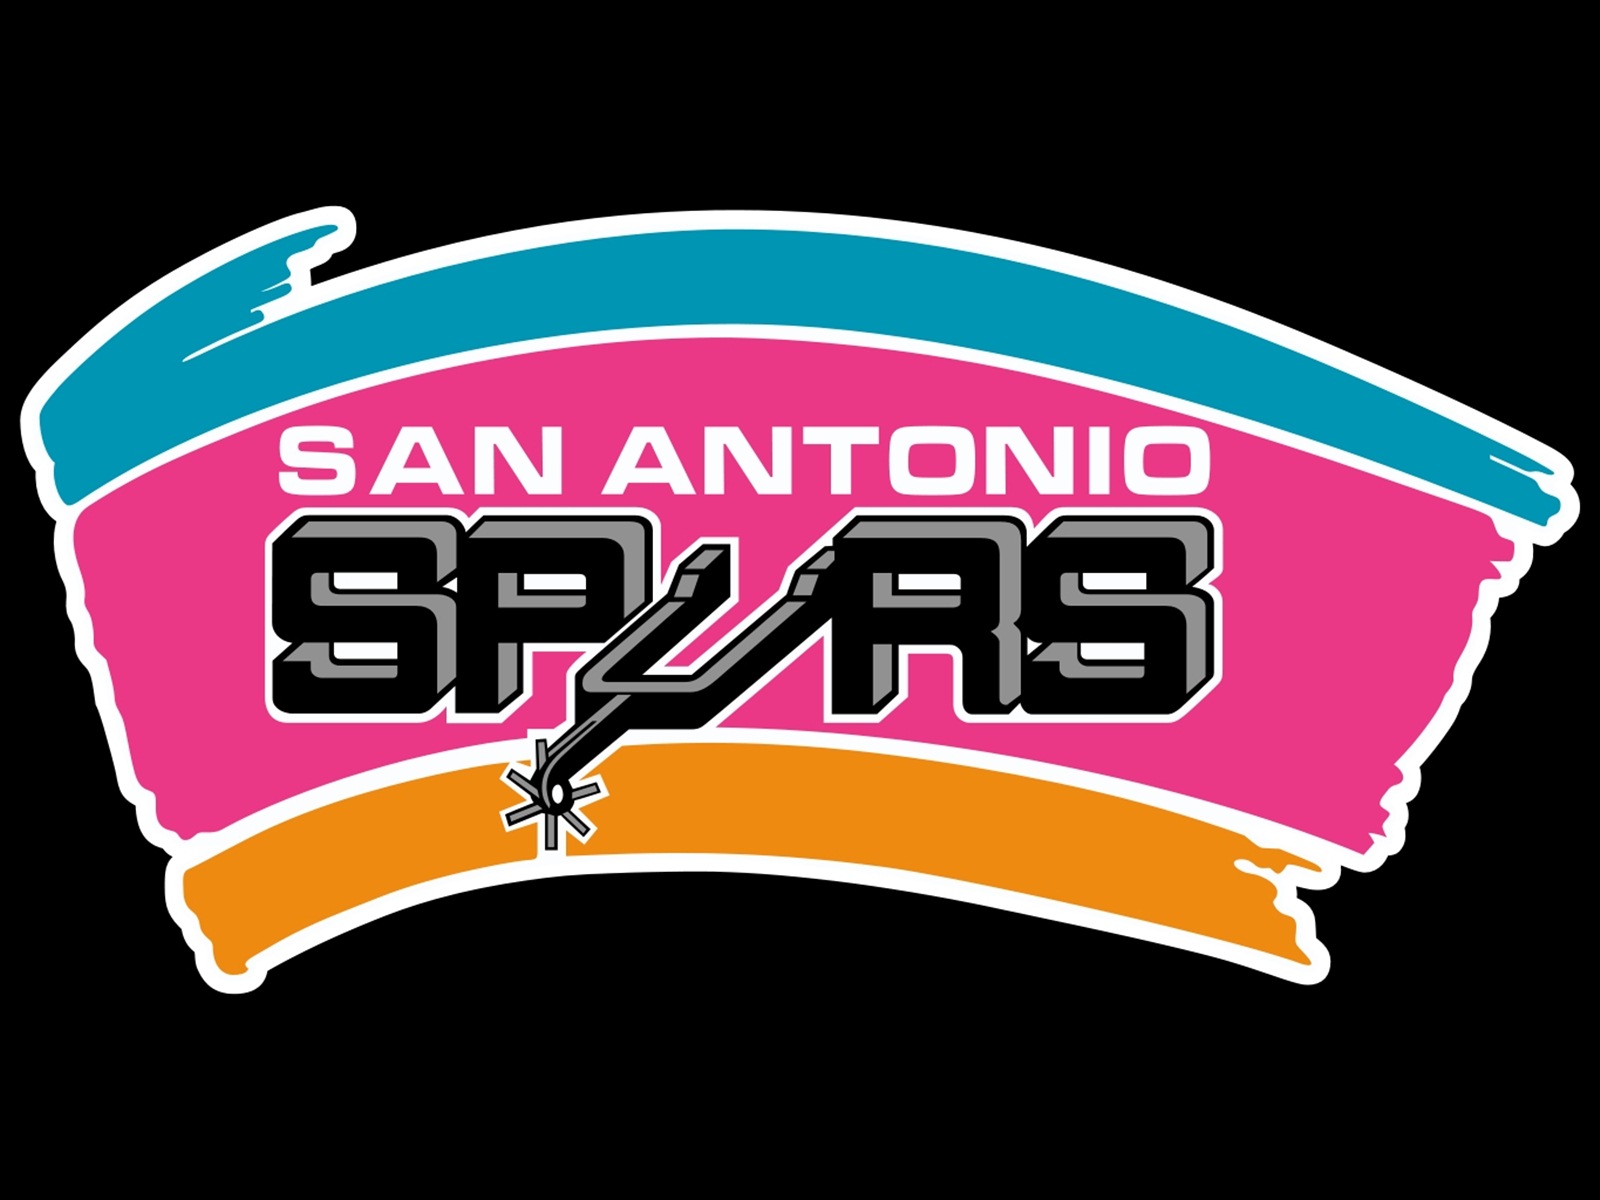 San Antonio Spurs Logo Wallpaper Hd Colorful - San Antonio Spurs Old - HD Wallpaper 